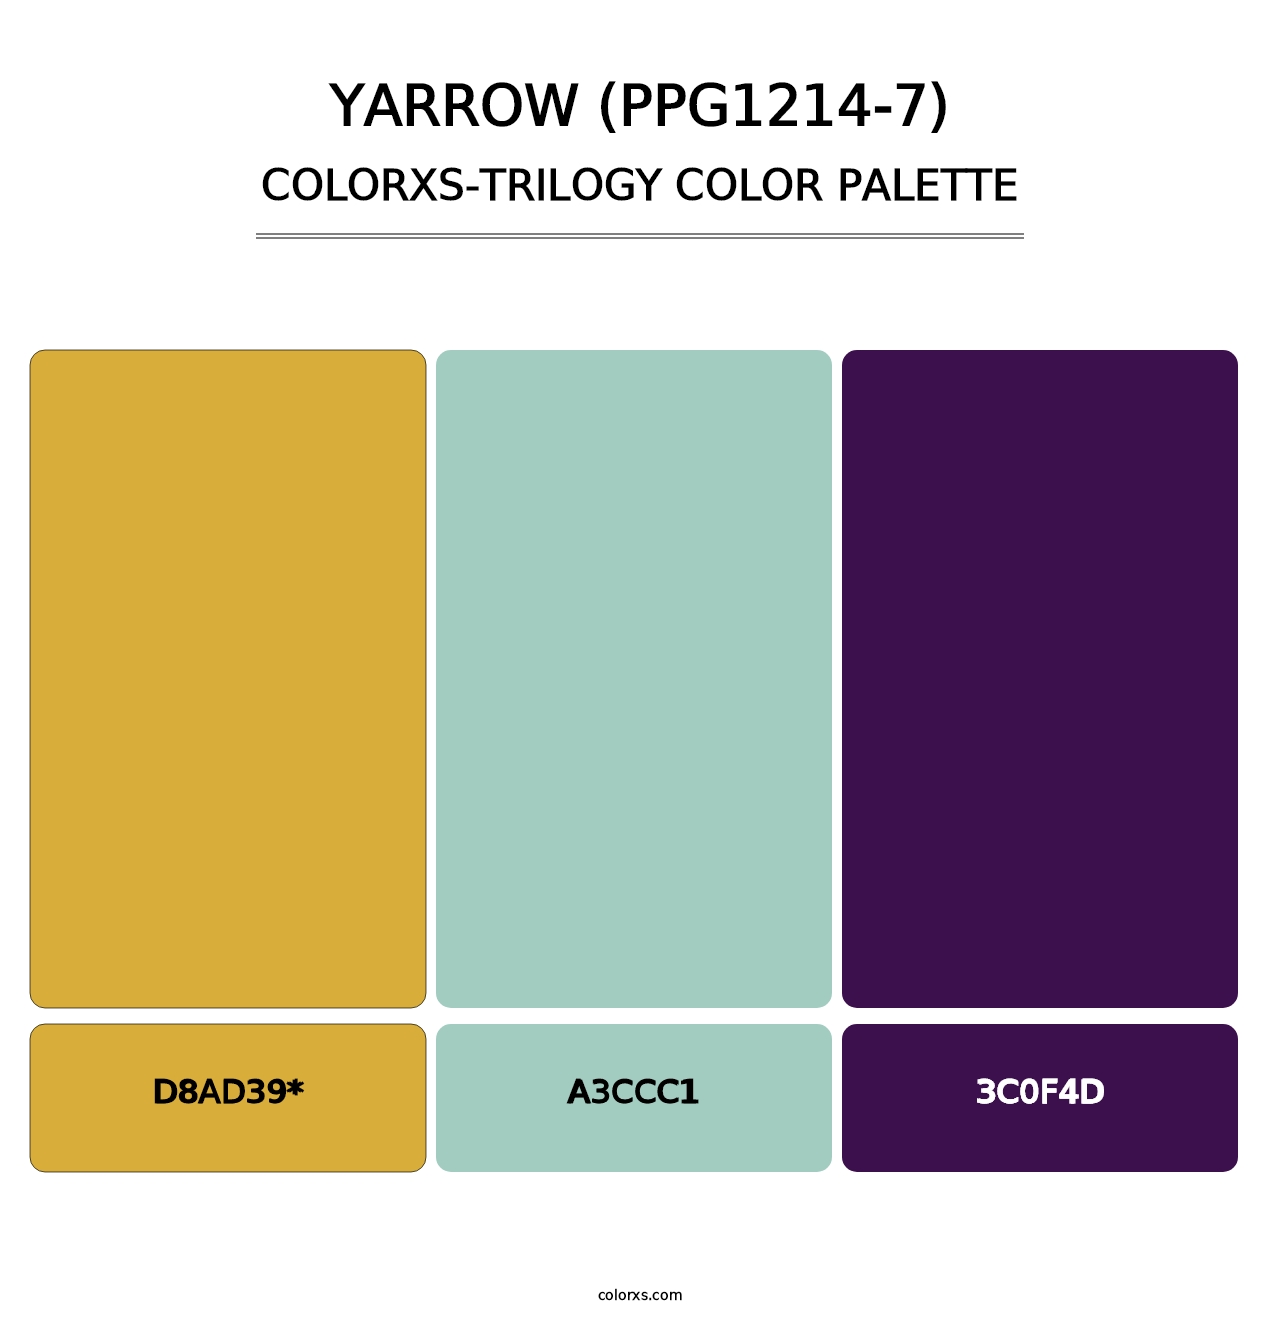 Yarrow (PPG1214-7) - Colorxs Trilogy Palette